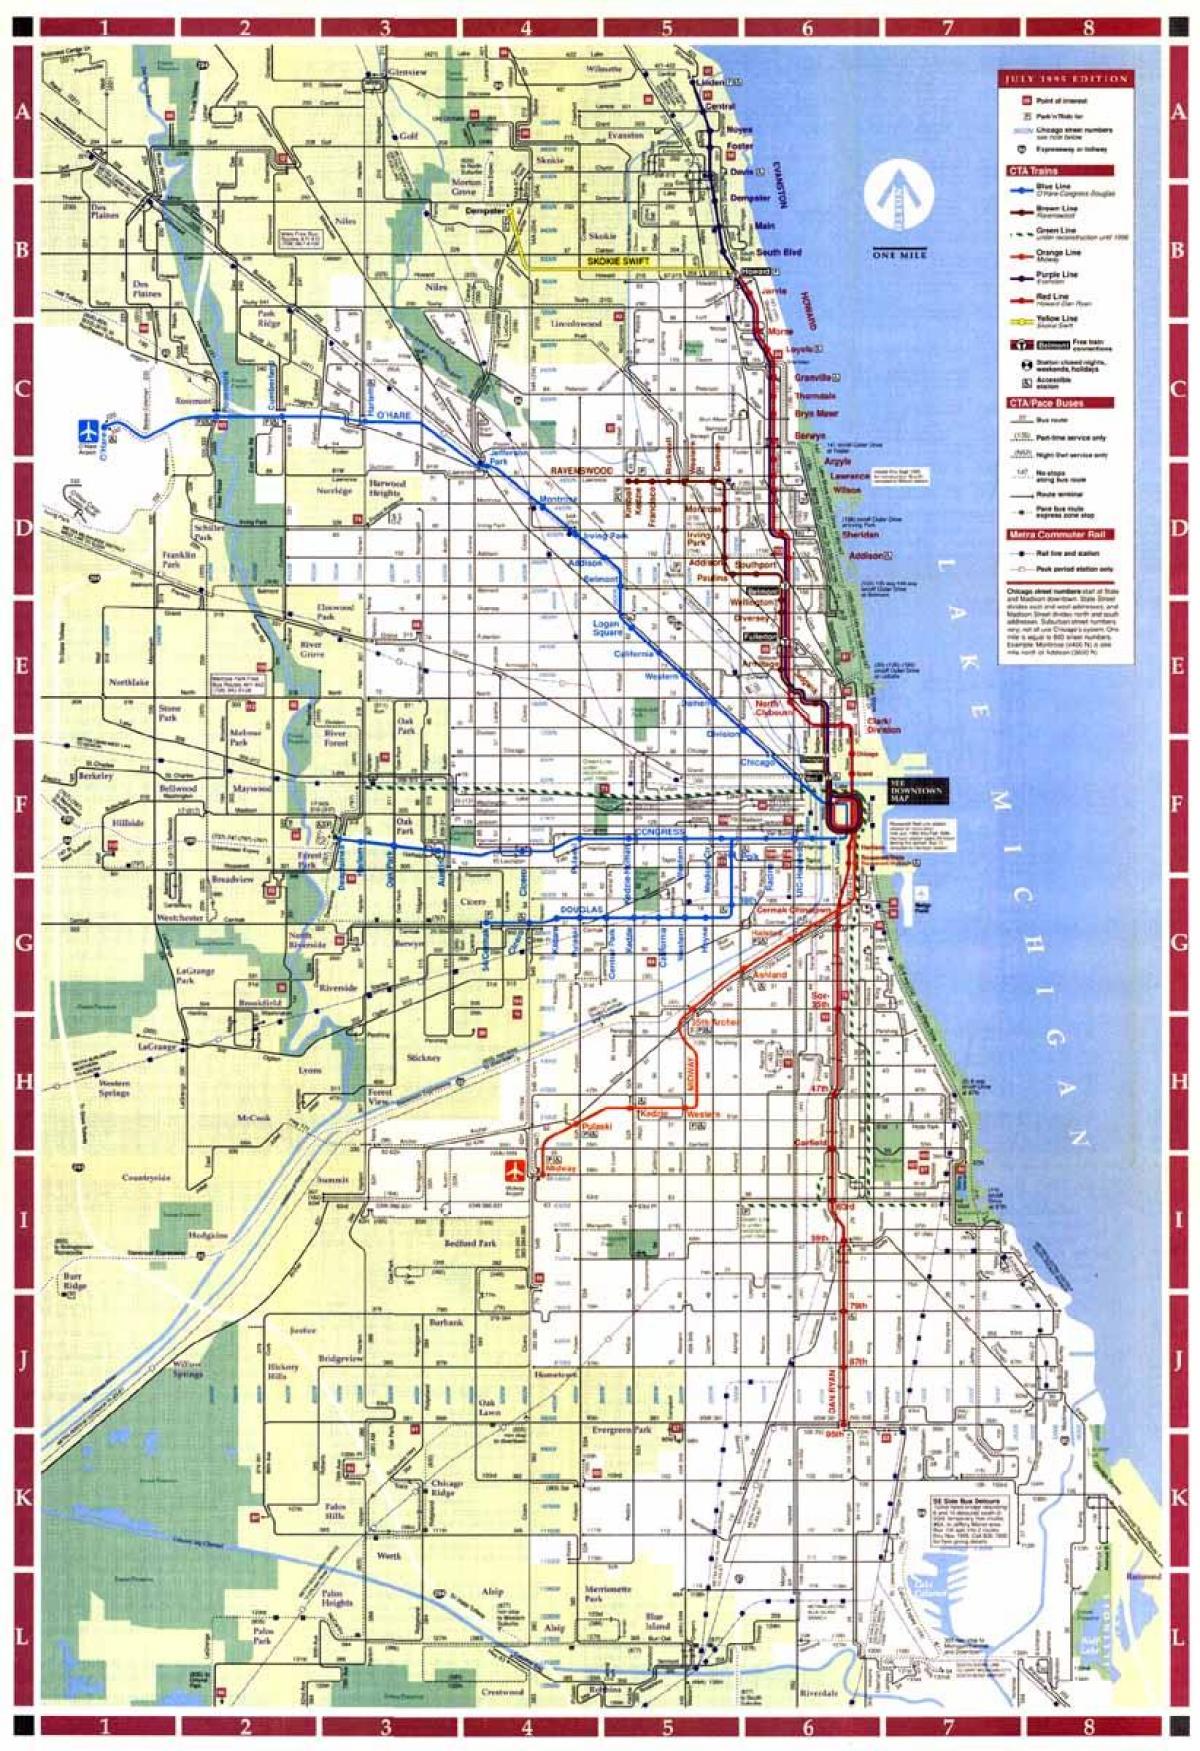 kort over Chicago city limits